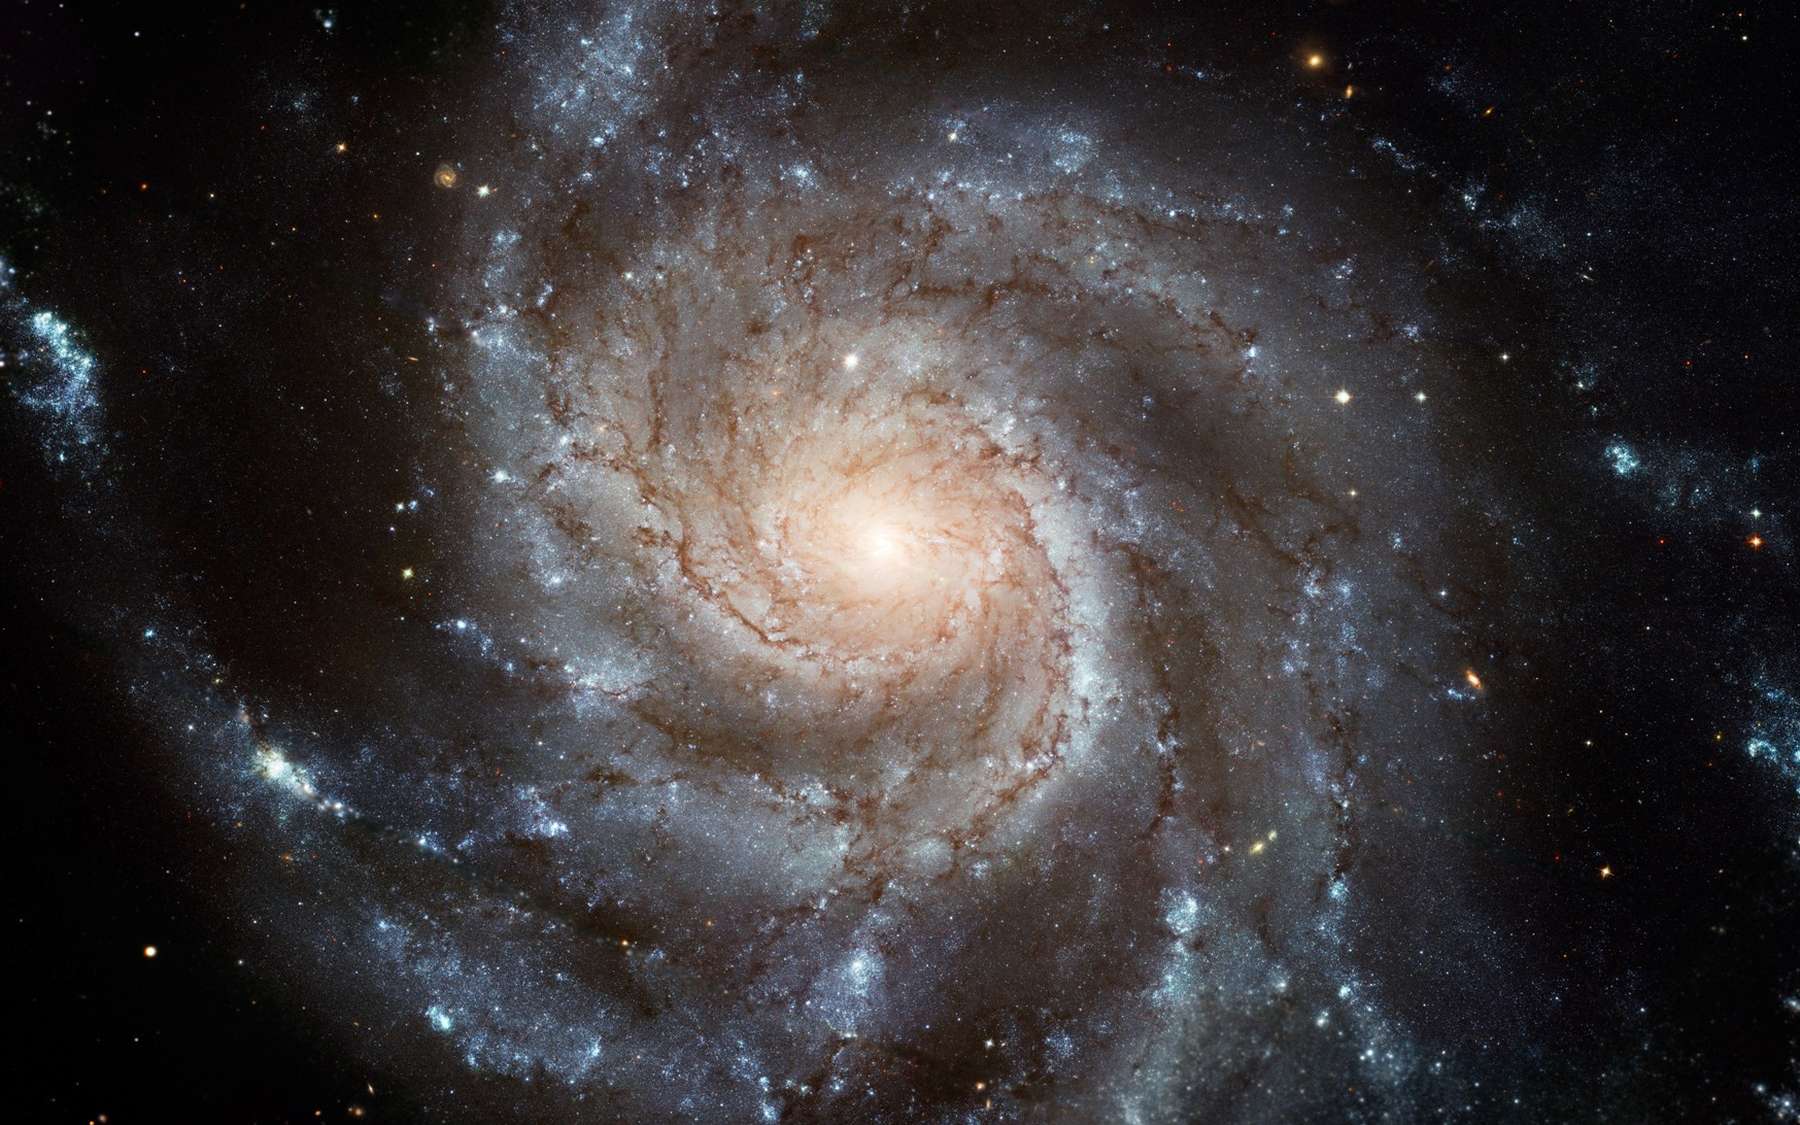 Les galaxies forment une même horloge cosmique. Ici, la galaxie du Moulinet vue par le télescope Hubble. © NASA, ESA, K. Kuntz (JHU), F. Bresolin (University of Hawaii), J. Trauger (Jet Propulsion Lab), J. Mould (NOAO), Y.-H. Chu (University of Illinois, Urbana) and STScI; CFHT Image: Canada-France-Hawaii Telescope/J.-C. Cuillandre/Coelum; NOAO Image: G. Jacoby, B. Bohannan, M. Hanna/NOAO/AURA/NSF